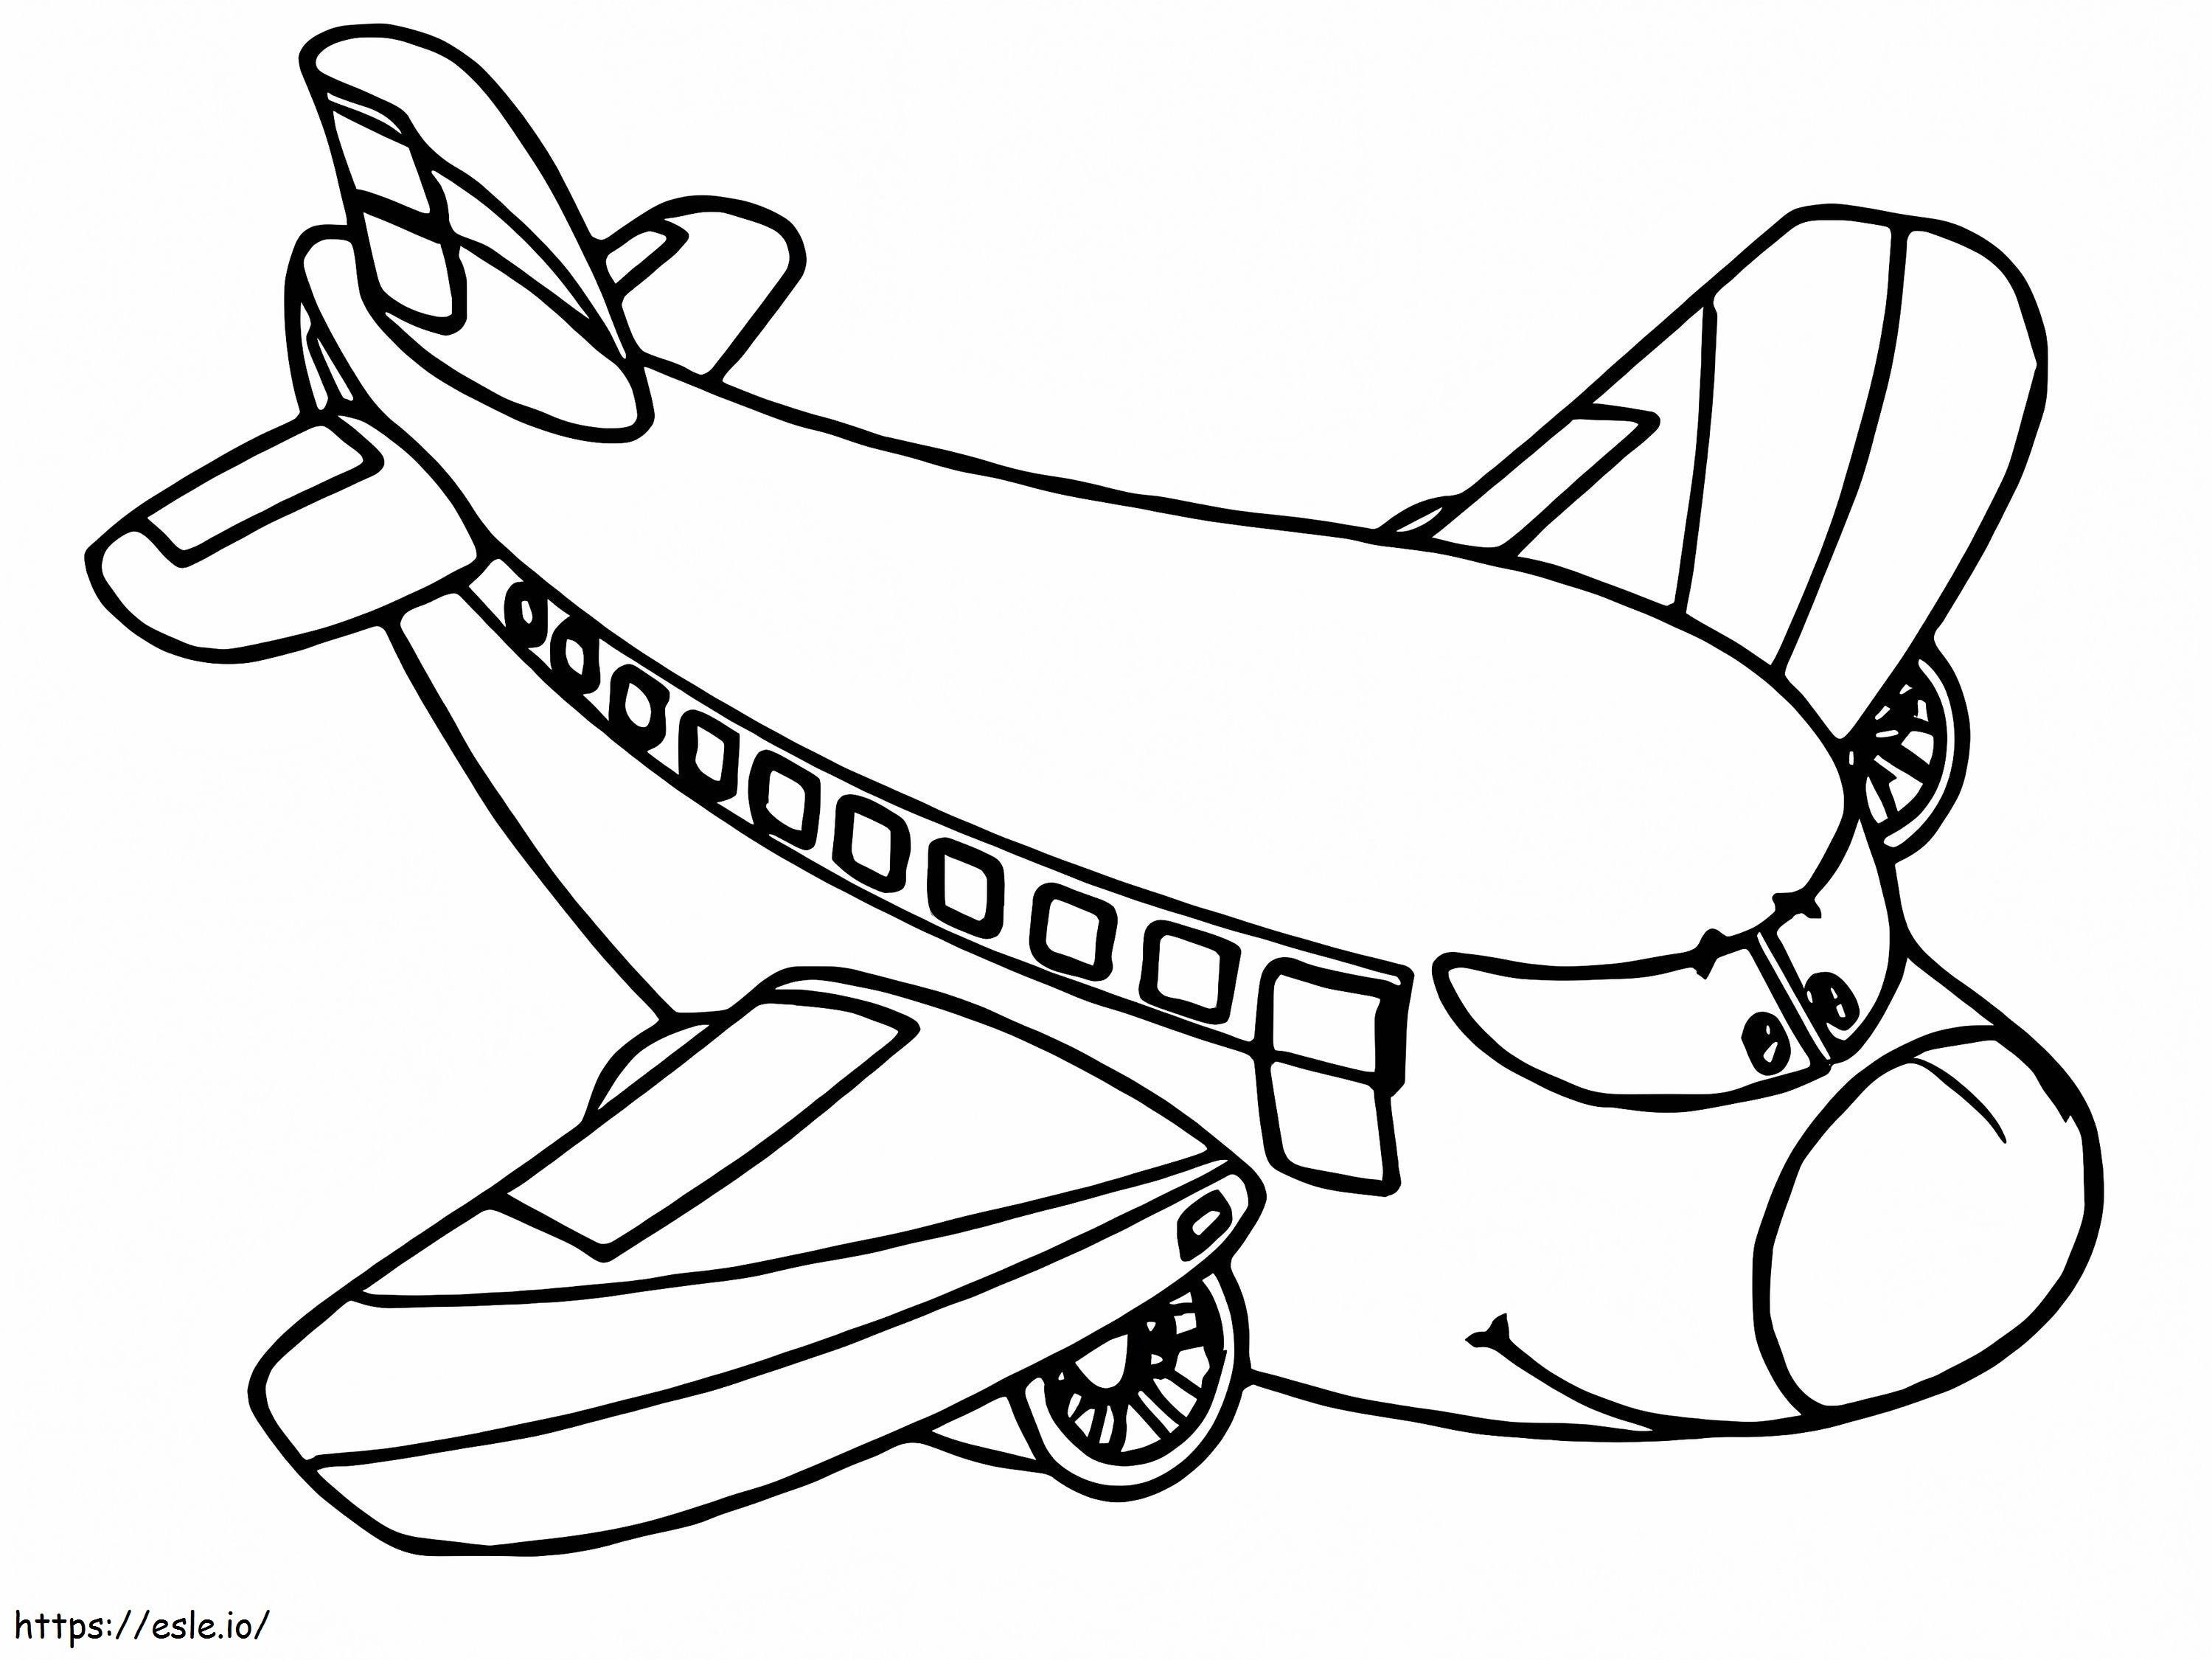 Cartoon-Flugzeug ausmalbilder